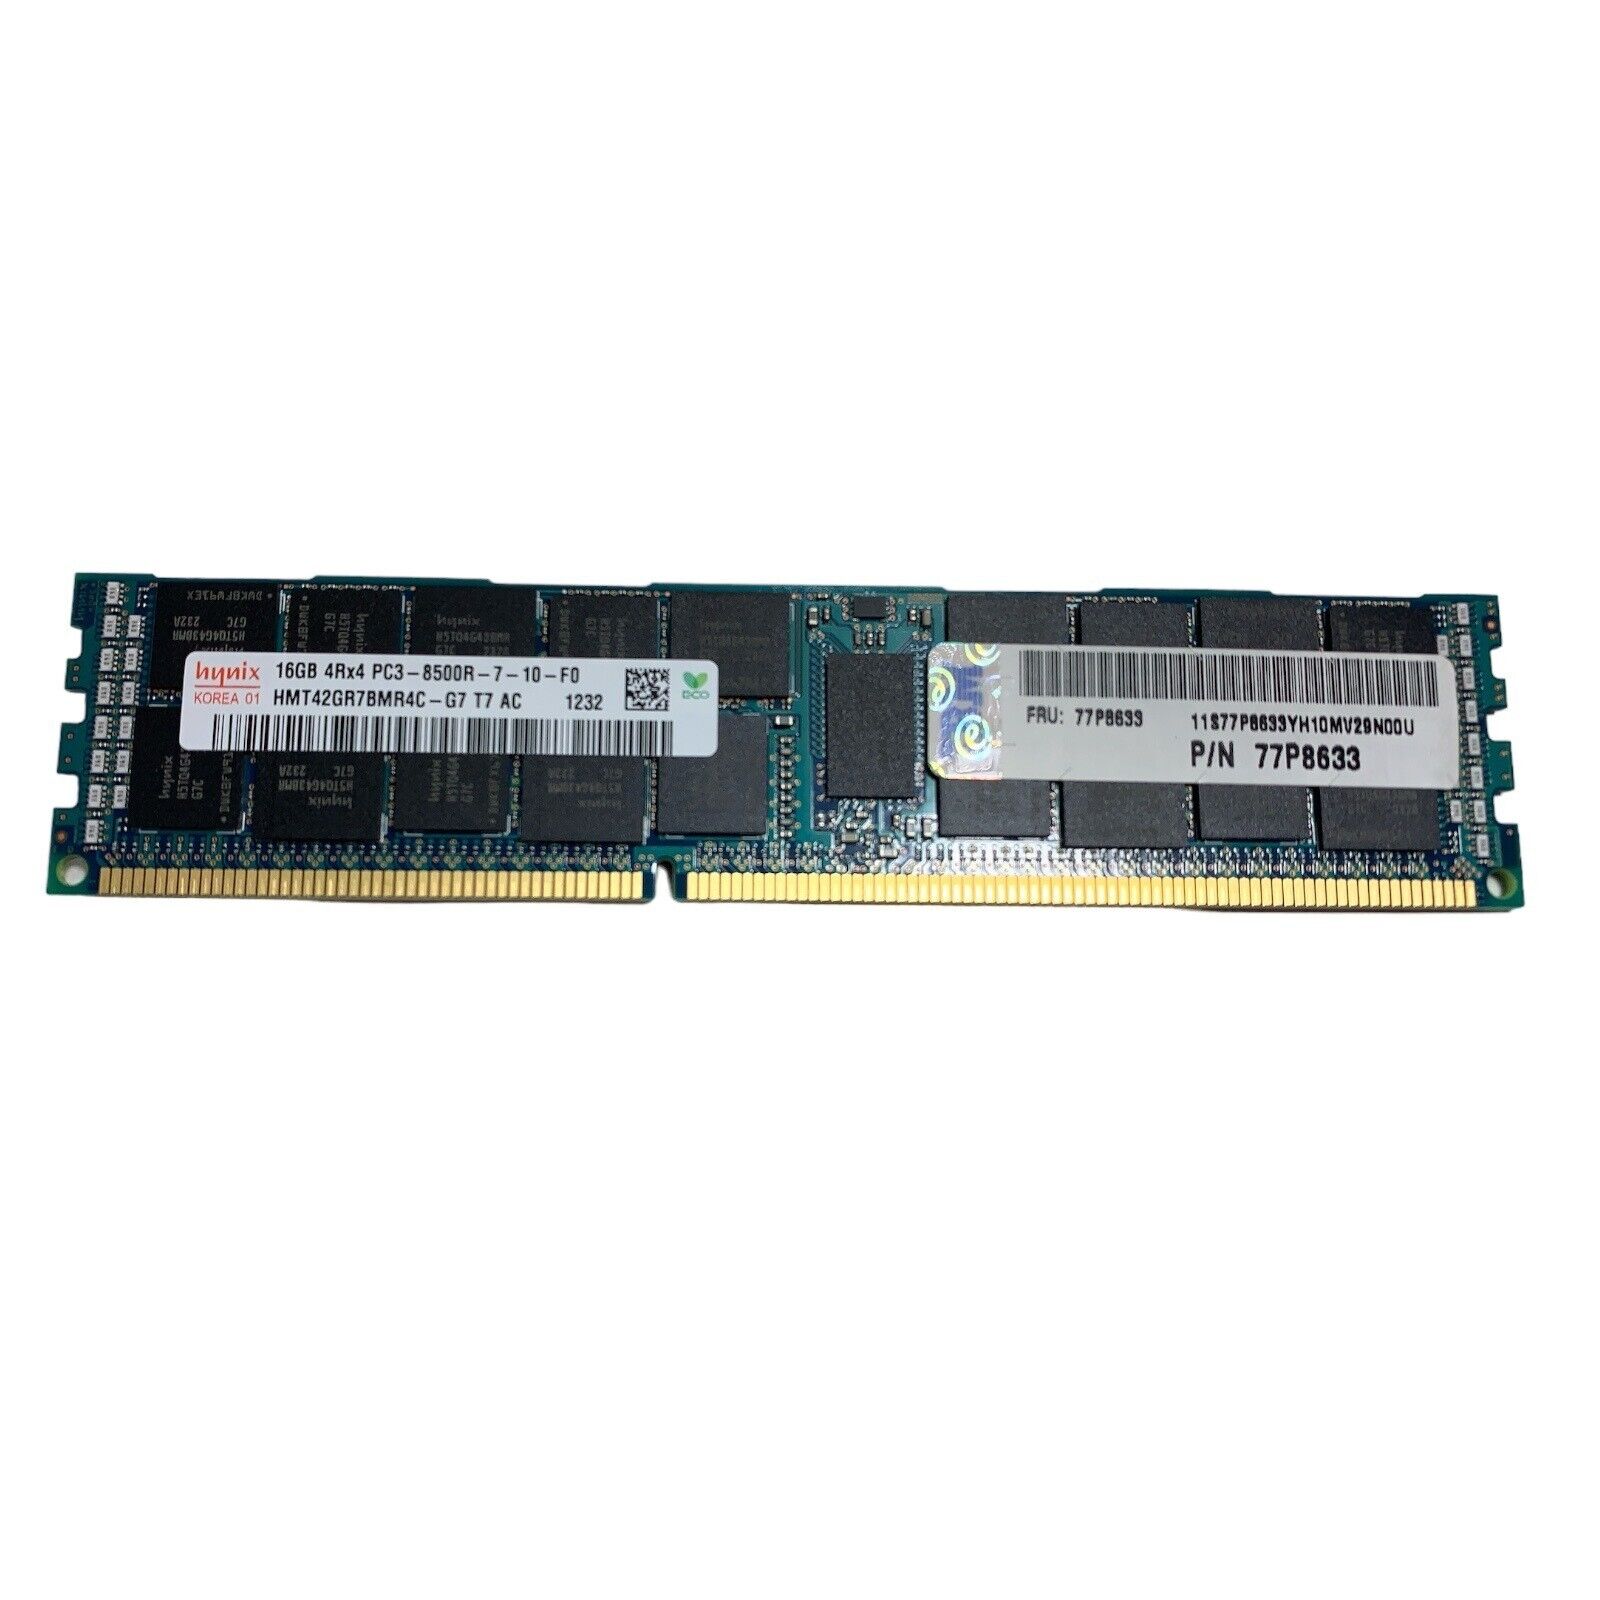 Hynix IBM Certified 16GB 4Rx4 PC3 8500R Server Memory RAM